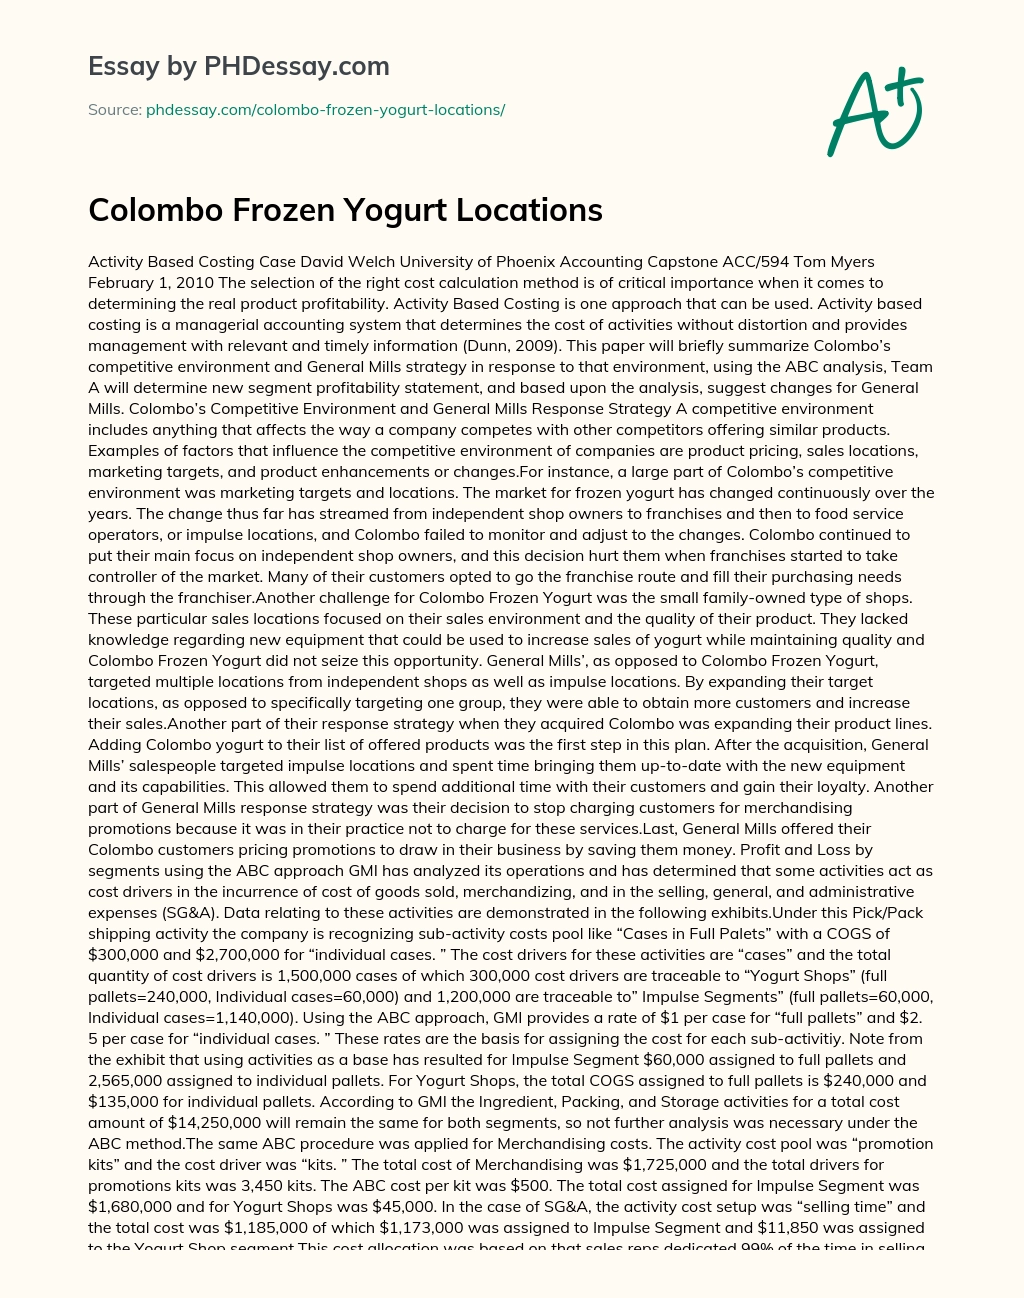 colombo frozen yogurt case study solution